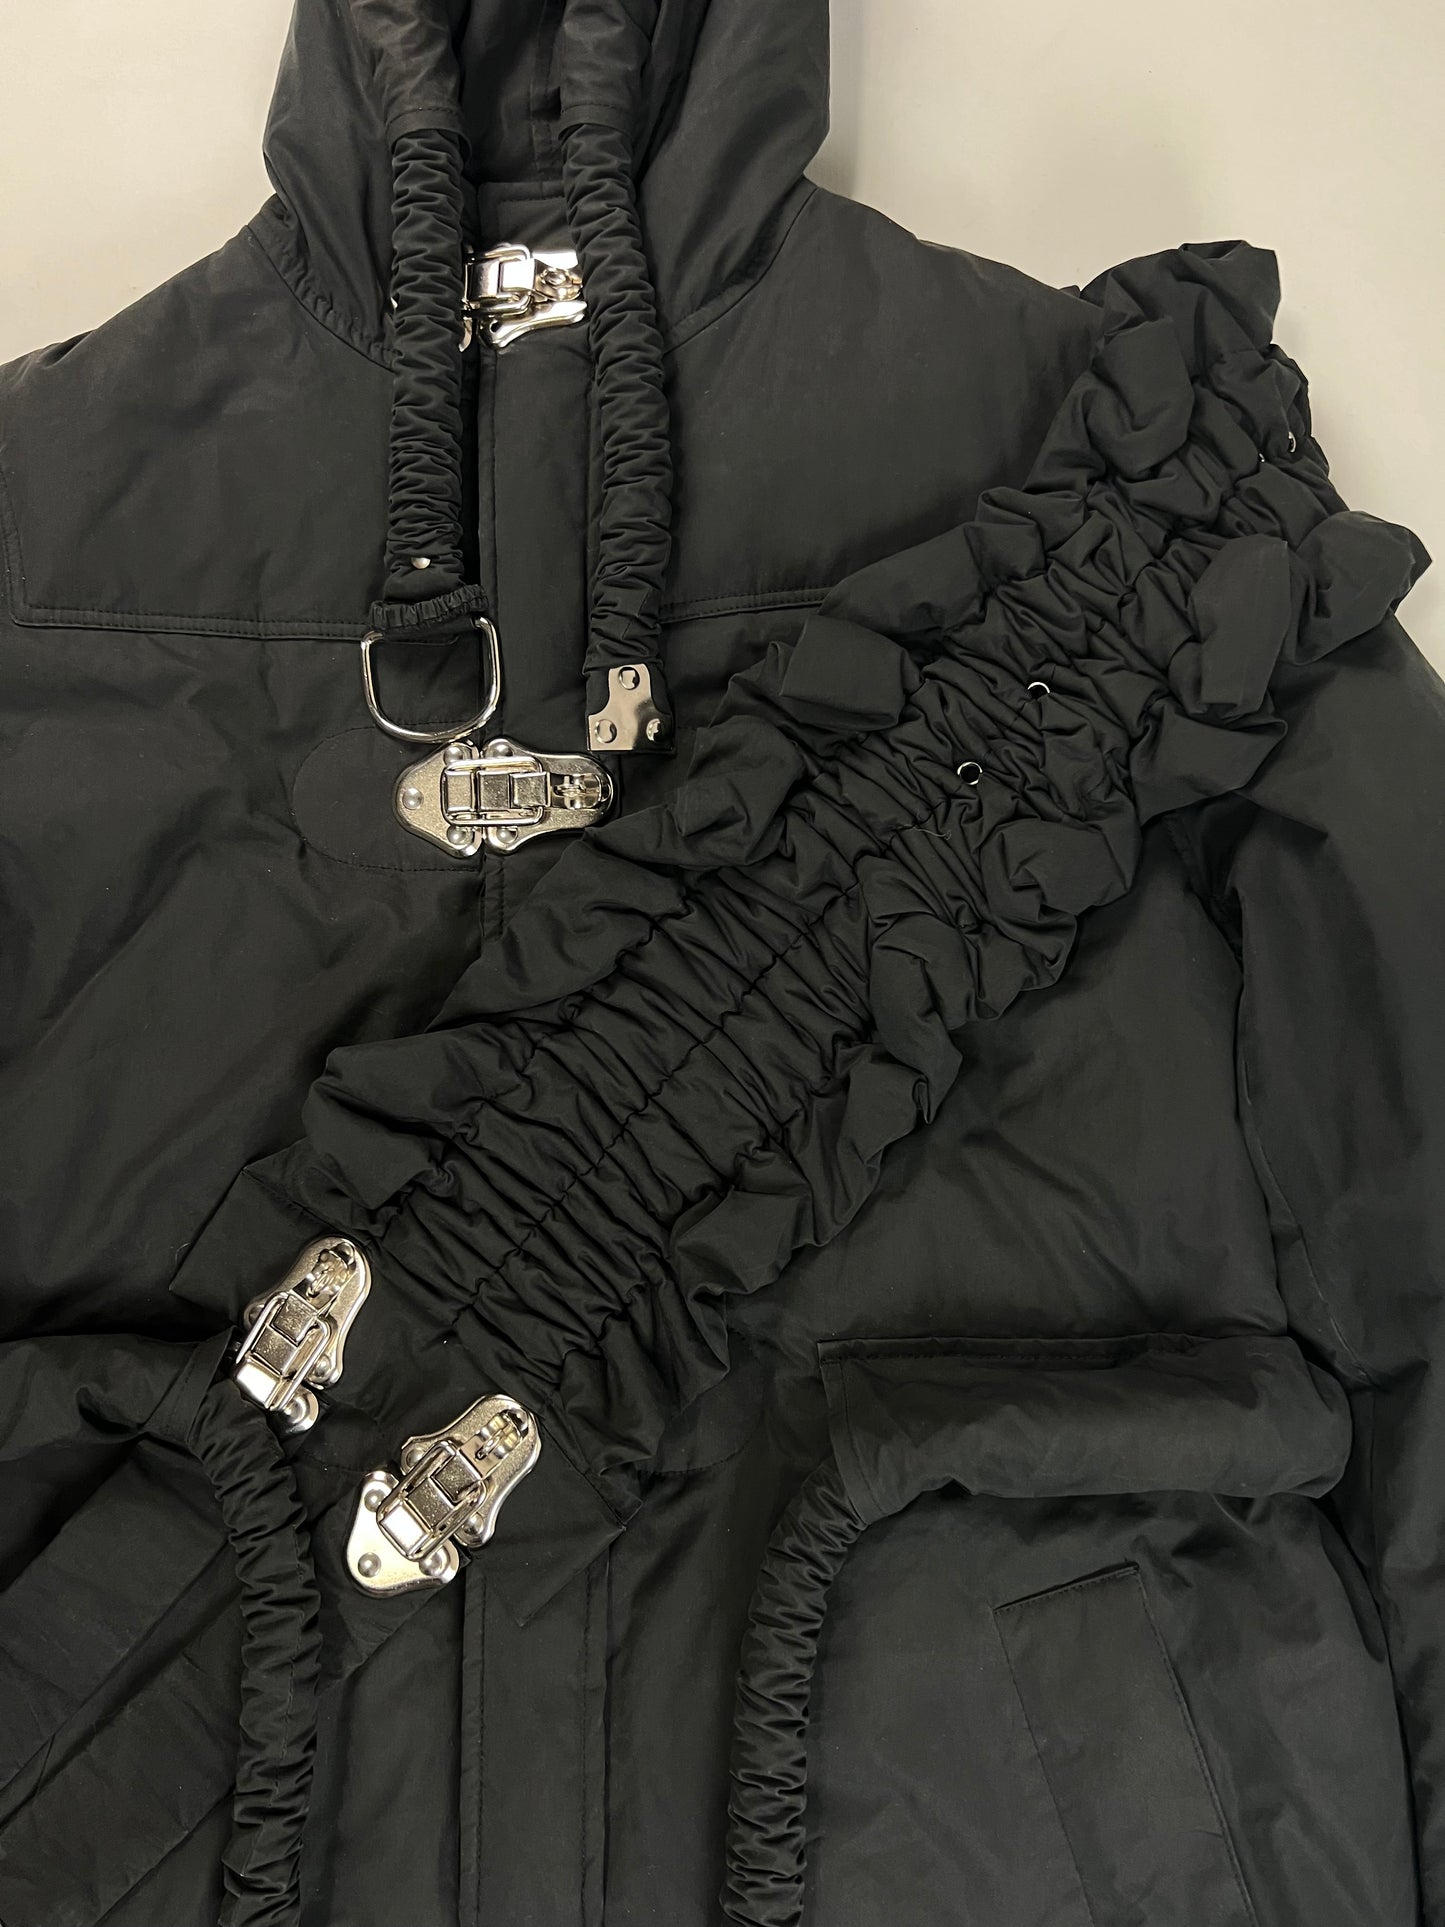 Craig Green AW17 runway scuba coat in black SZ:M